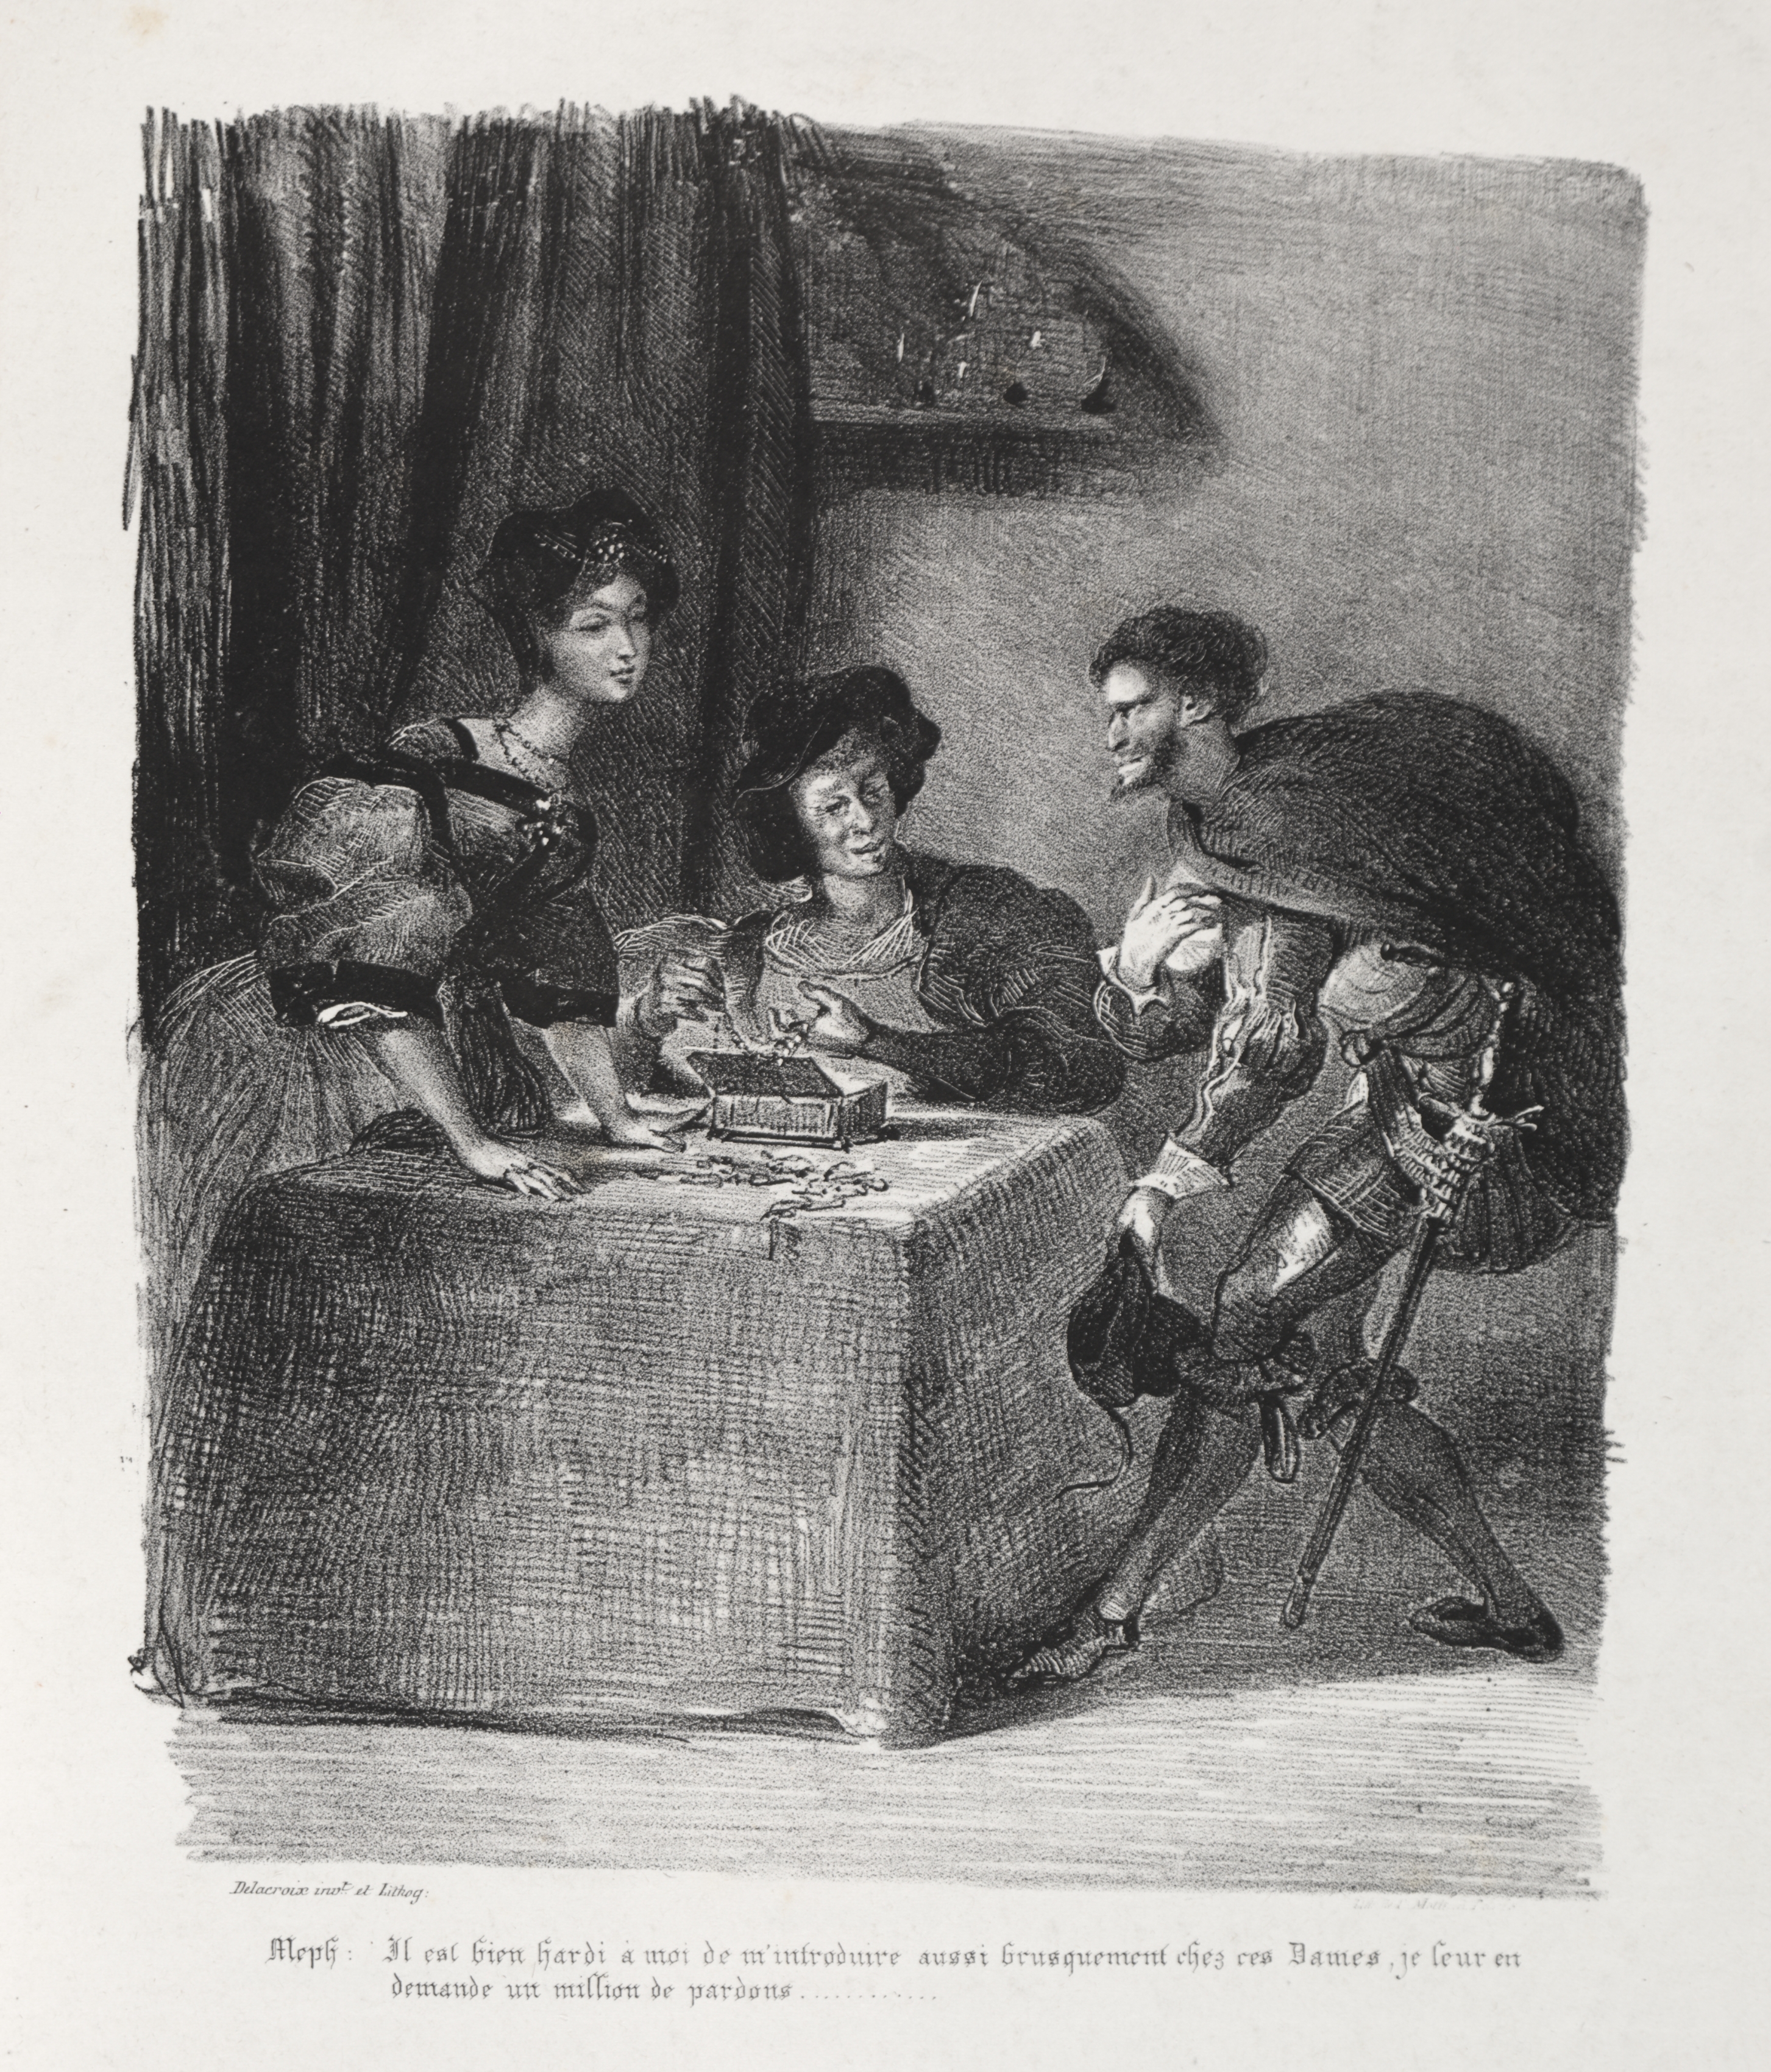 Illustrations for Faust: Méphistophelés is at Marthe